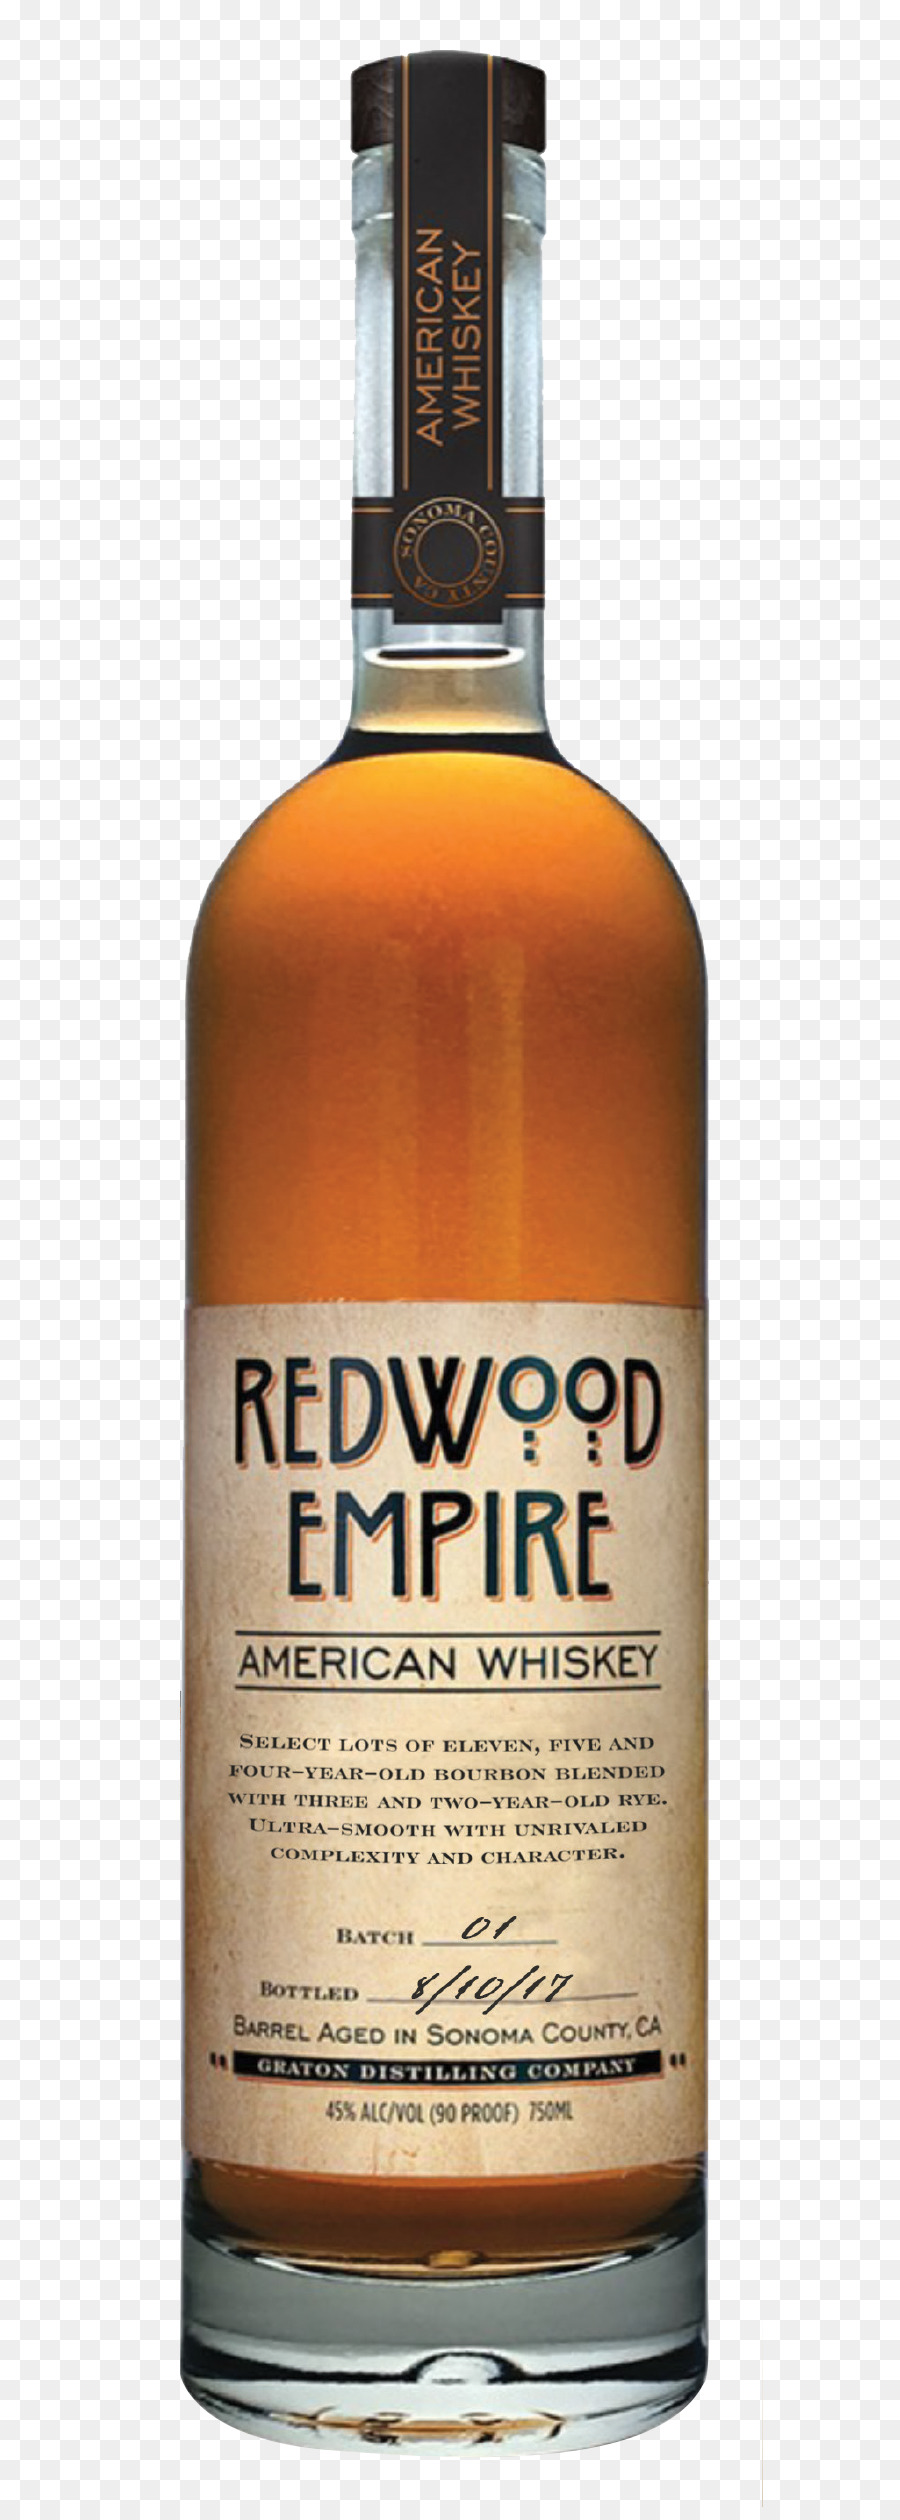 Tennessee whiskey Parchi Nazionale di Redwood Bourbon whiskey Americano Liquore whisky - vino